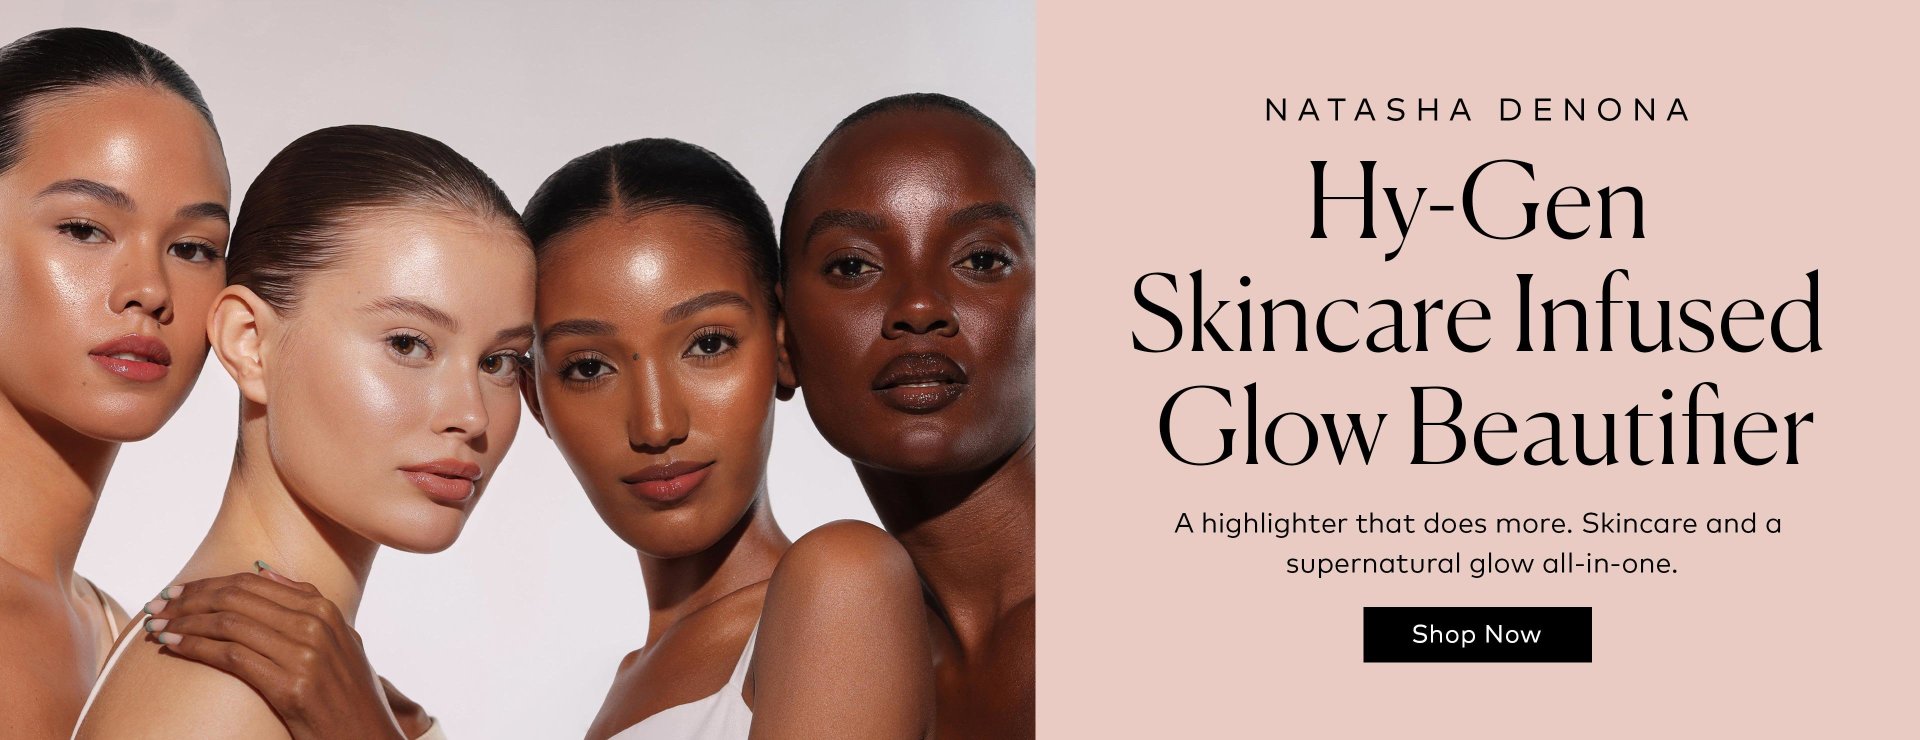 Shop the Natasha Denona Hy-Gen Skincare Infused Glow Beautifier on Beautylish.com!